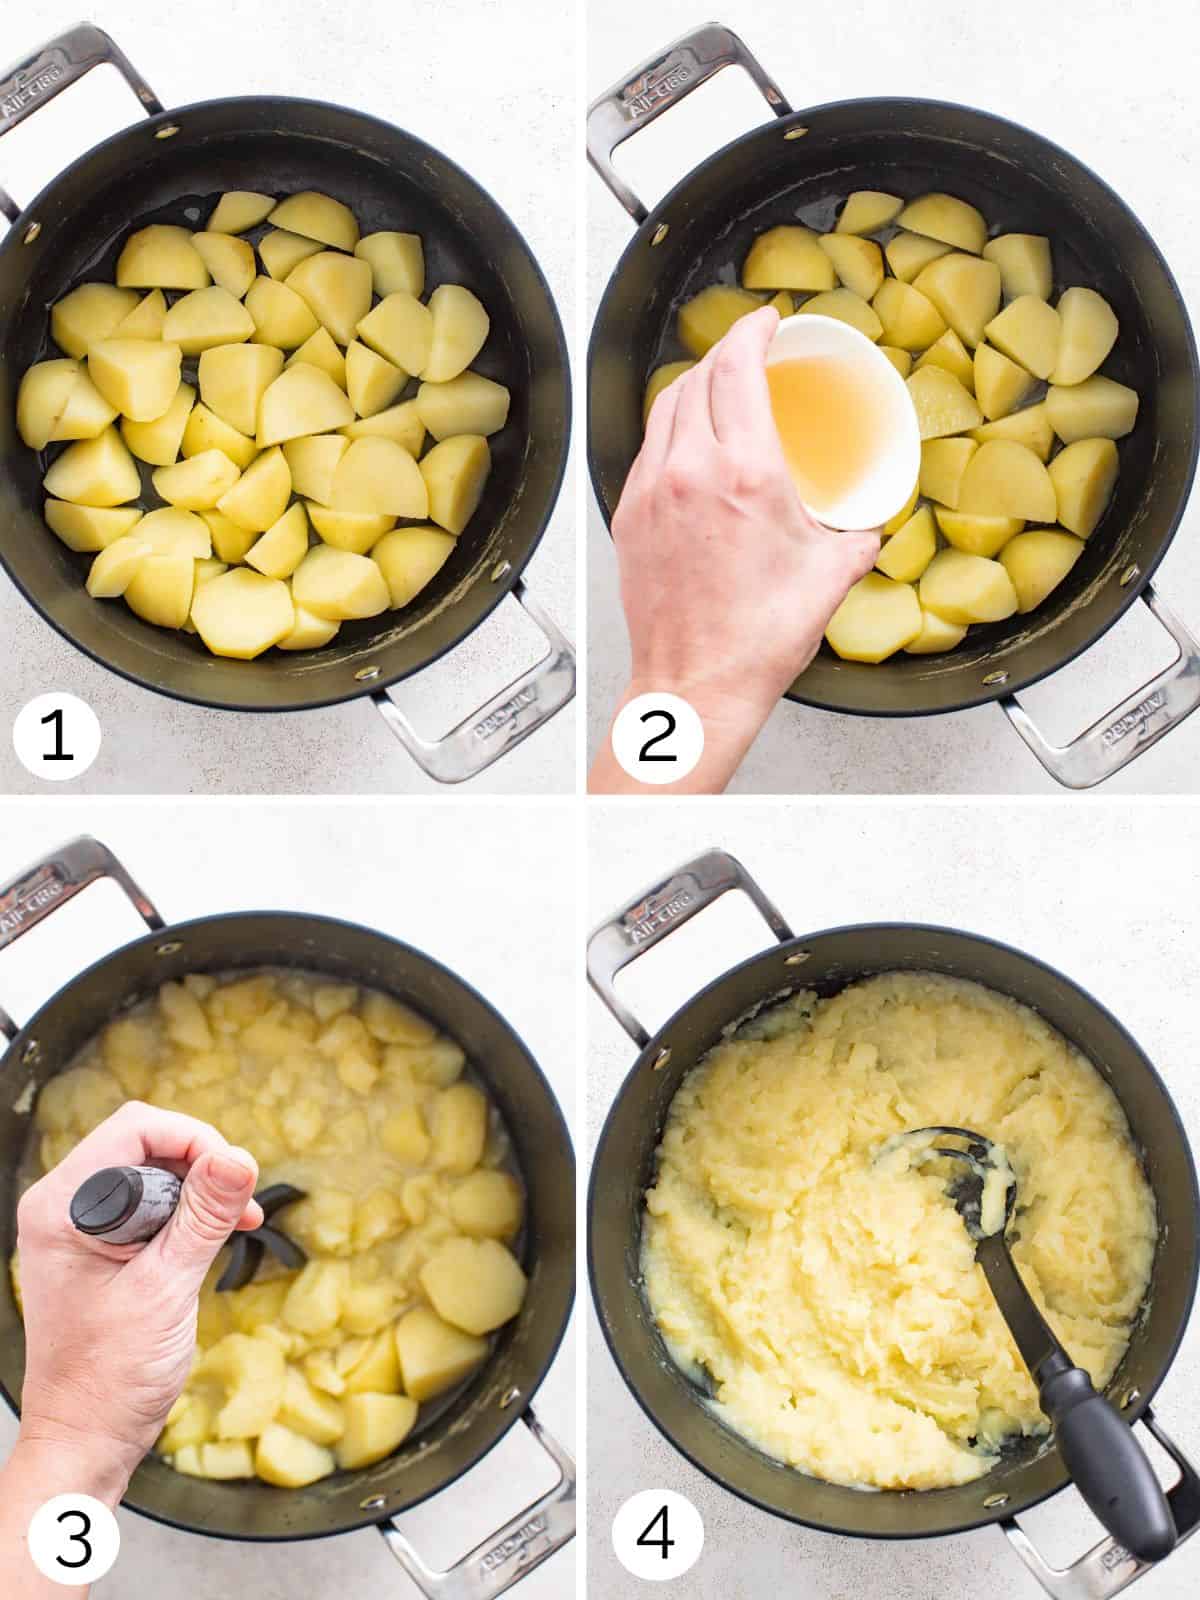 Process photos of boiling potatoes.